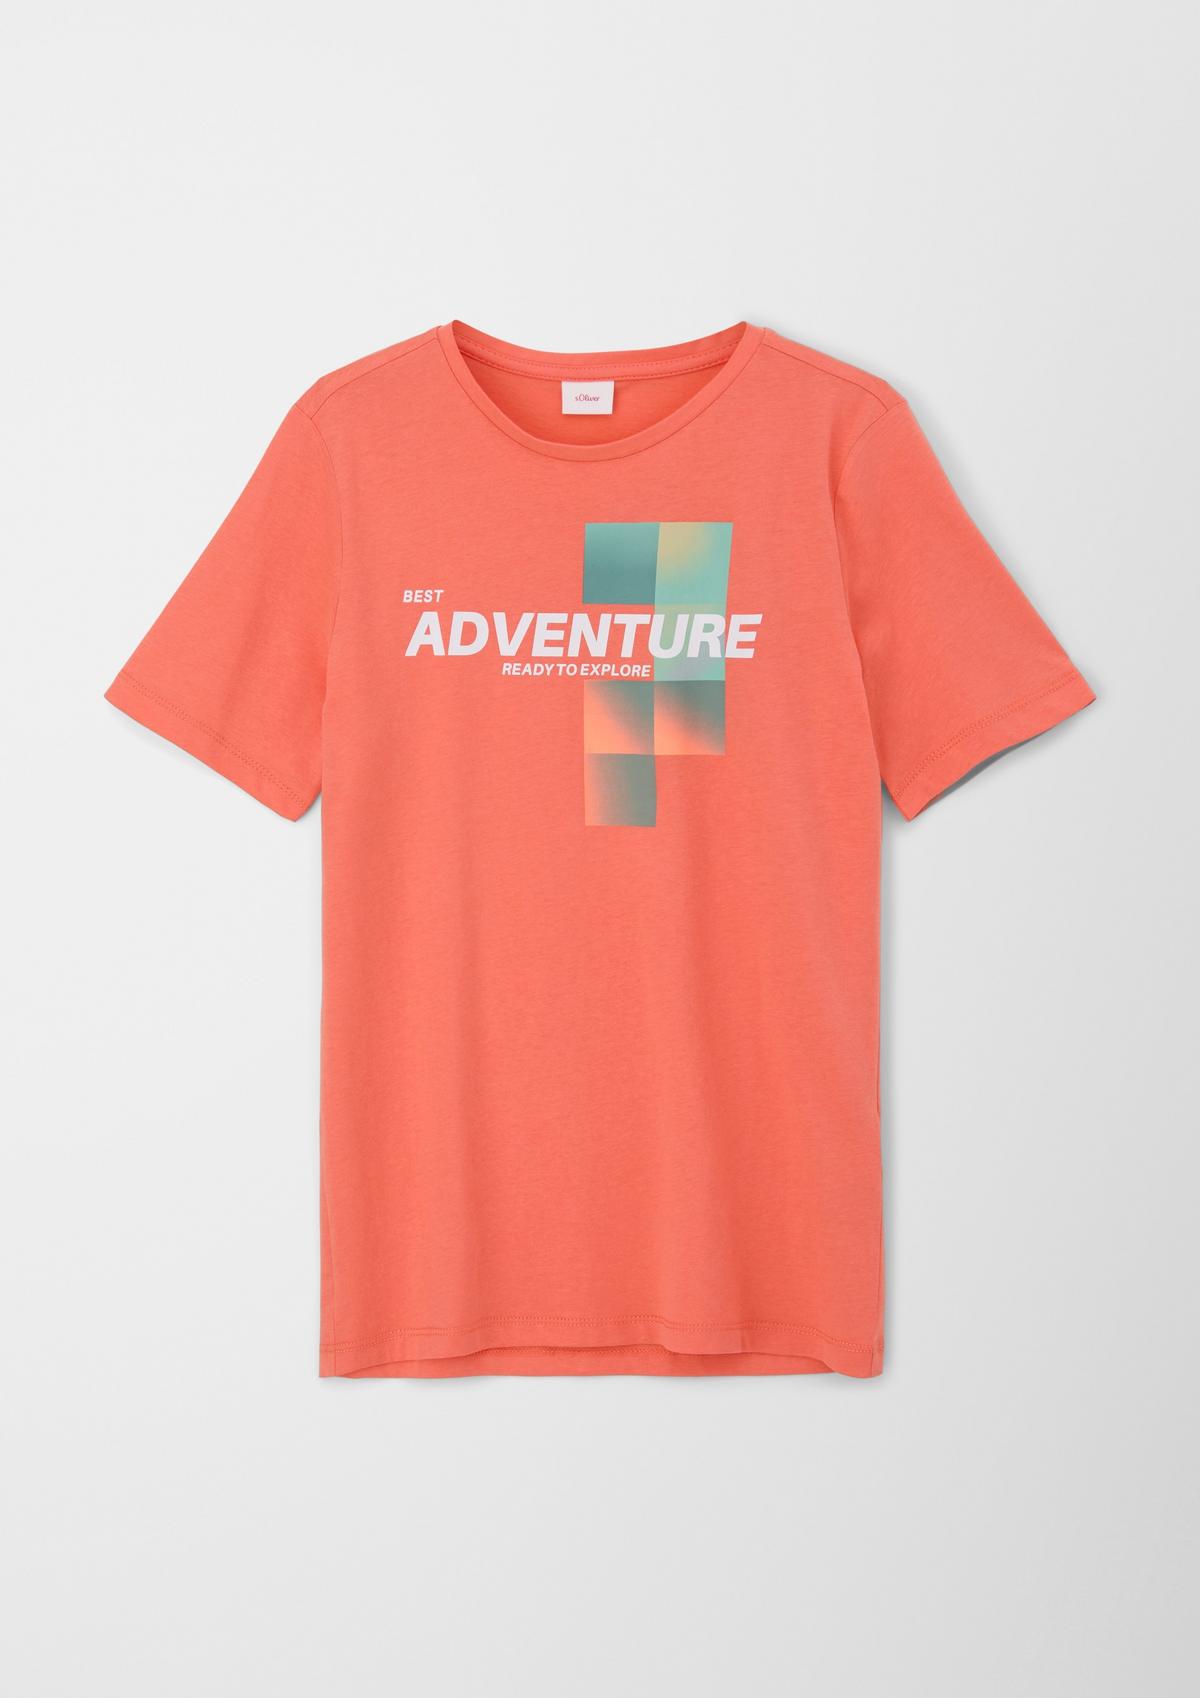 Cotton T-shirt blood front print with orange - a